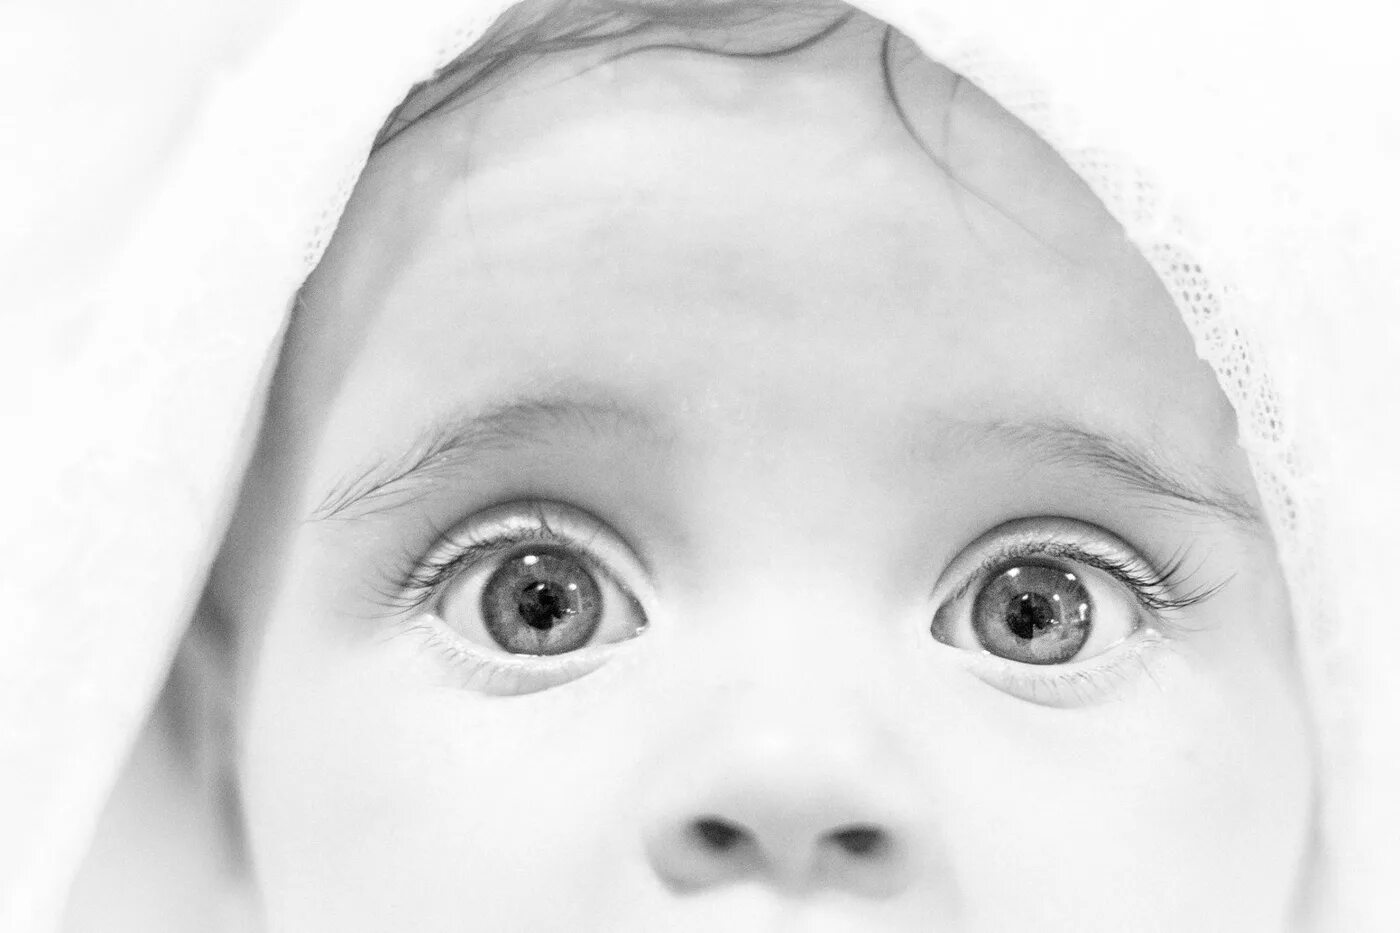 Baby eye песня. Детские глаза. Глаза младенца. Взгляд младенца. Мудрые глаза ребенка.